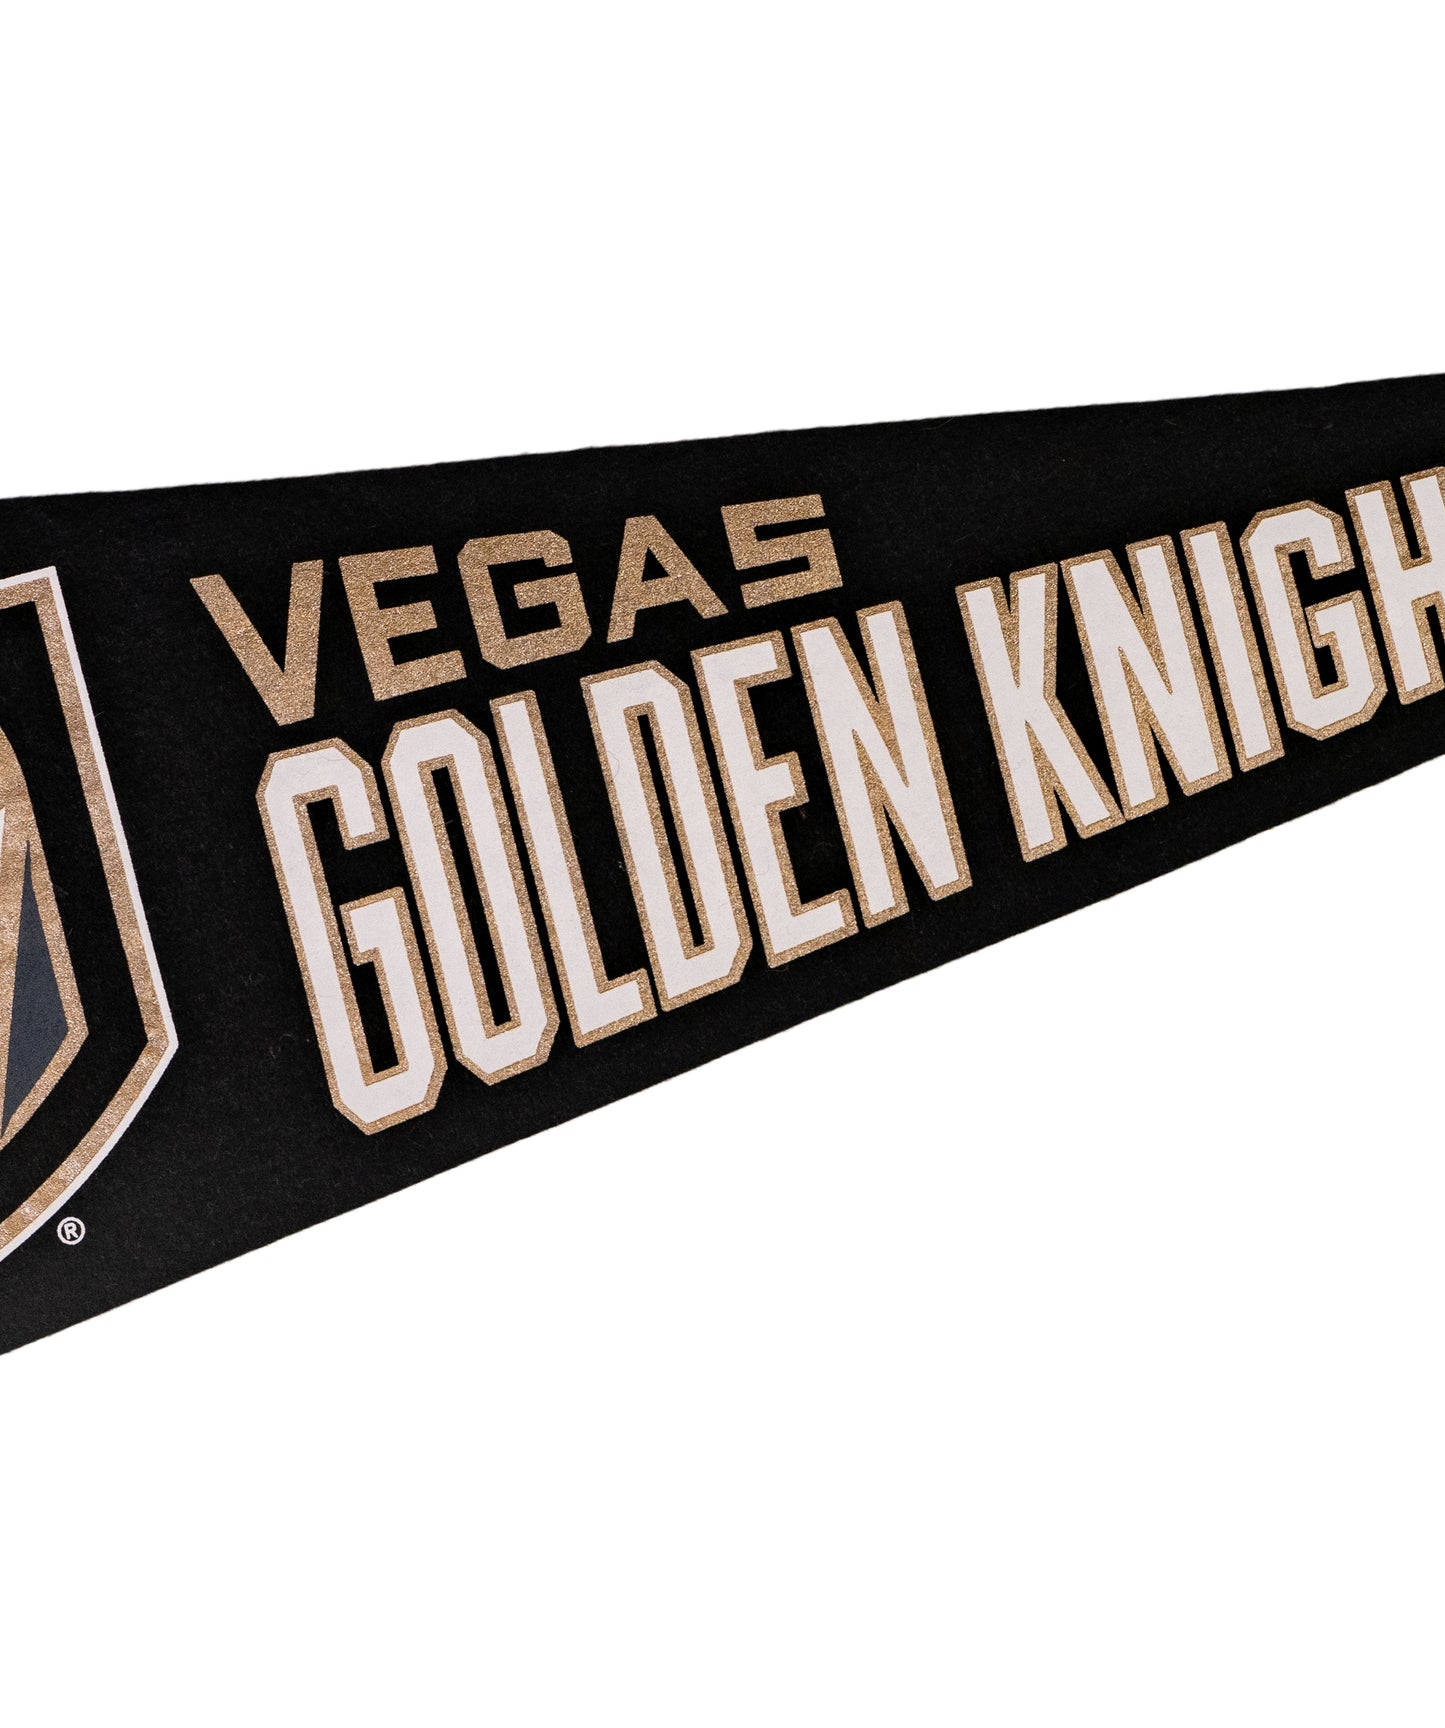 Vegas Golden Knights Pennant • NHL x Oxford Pennant